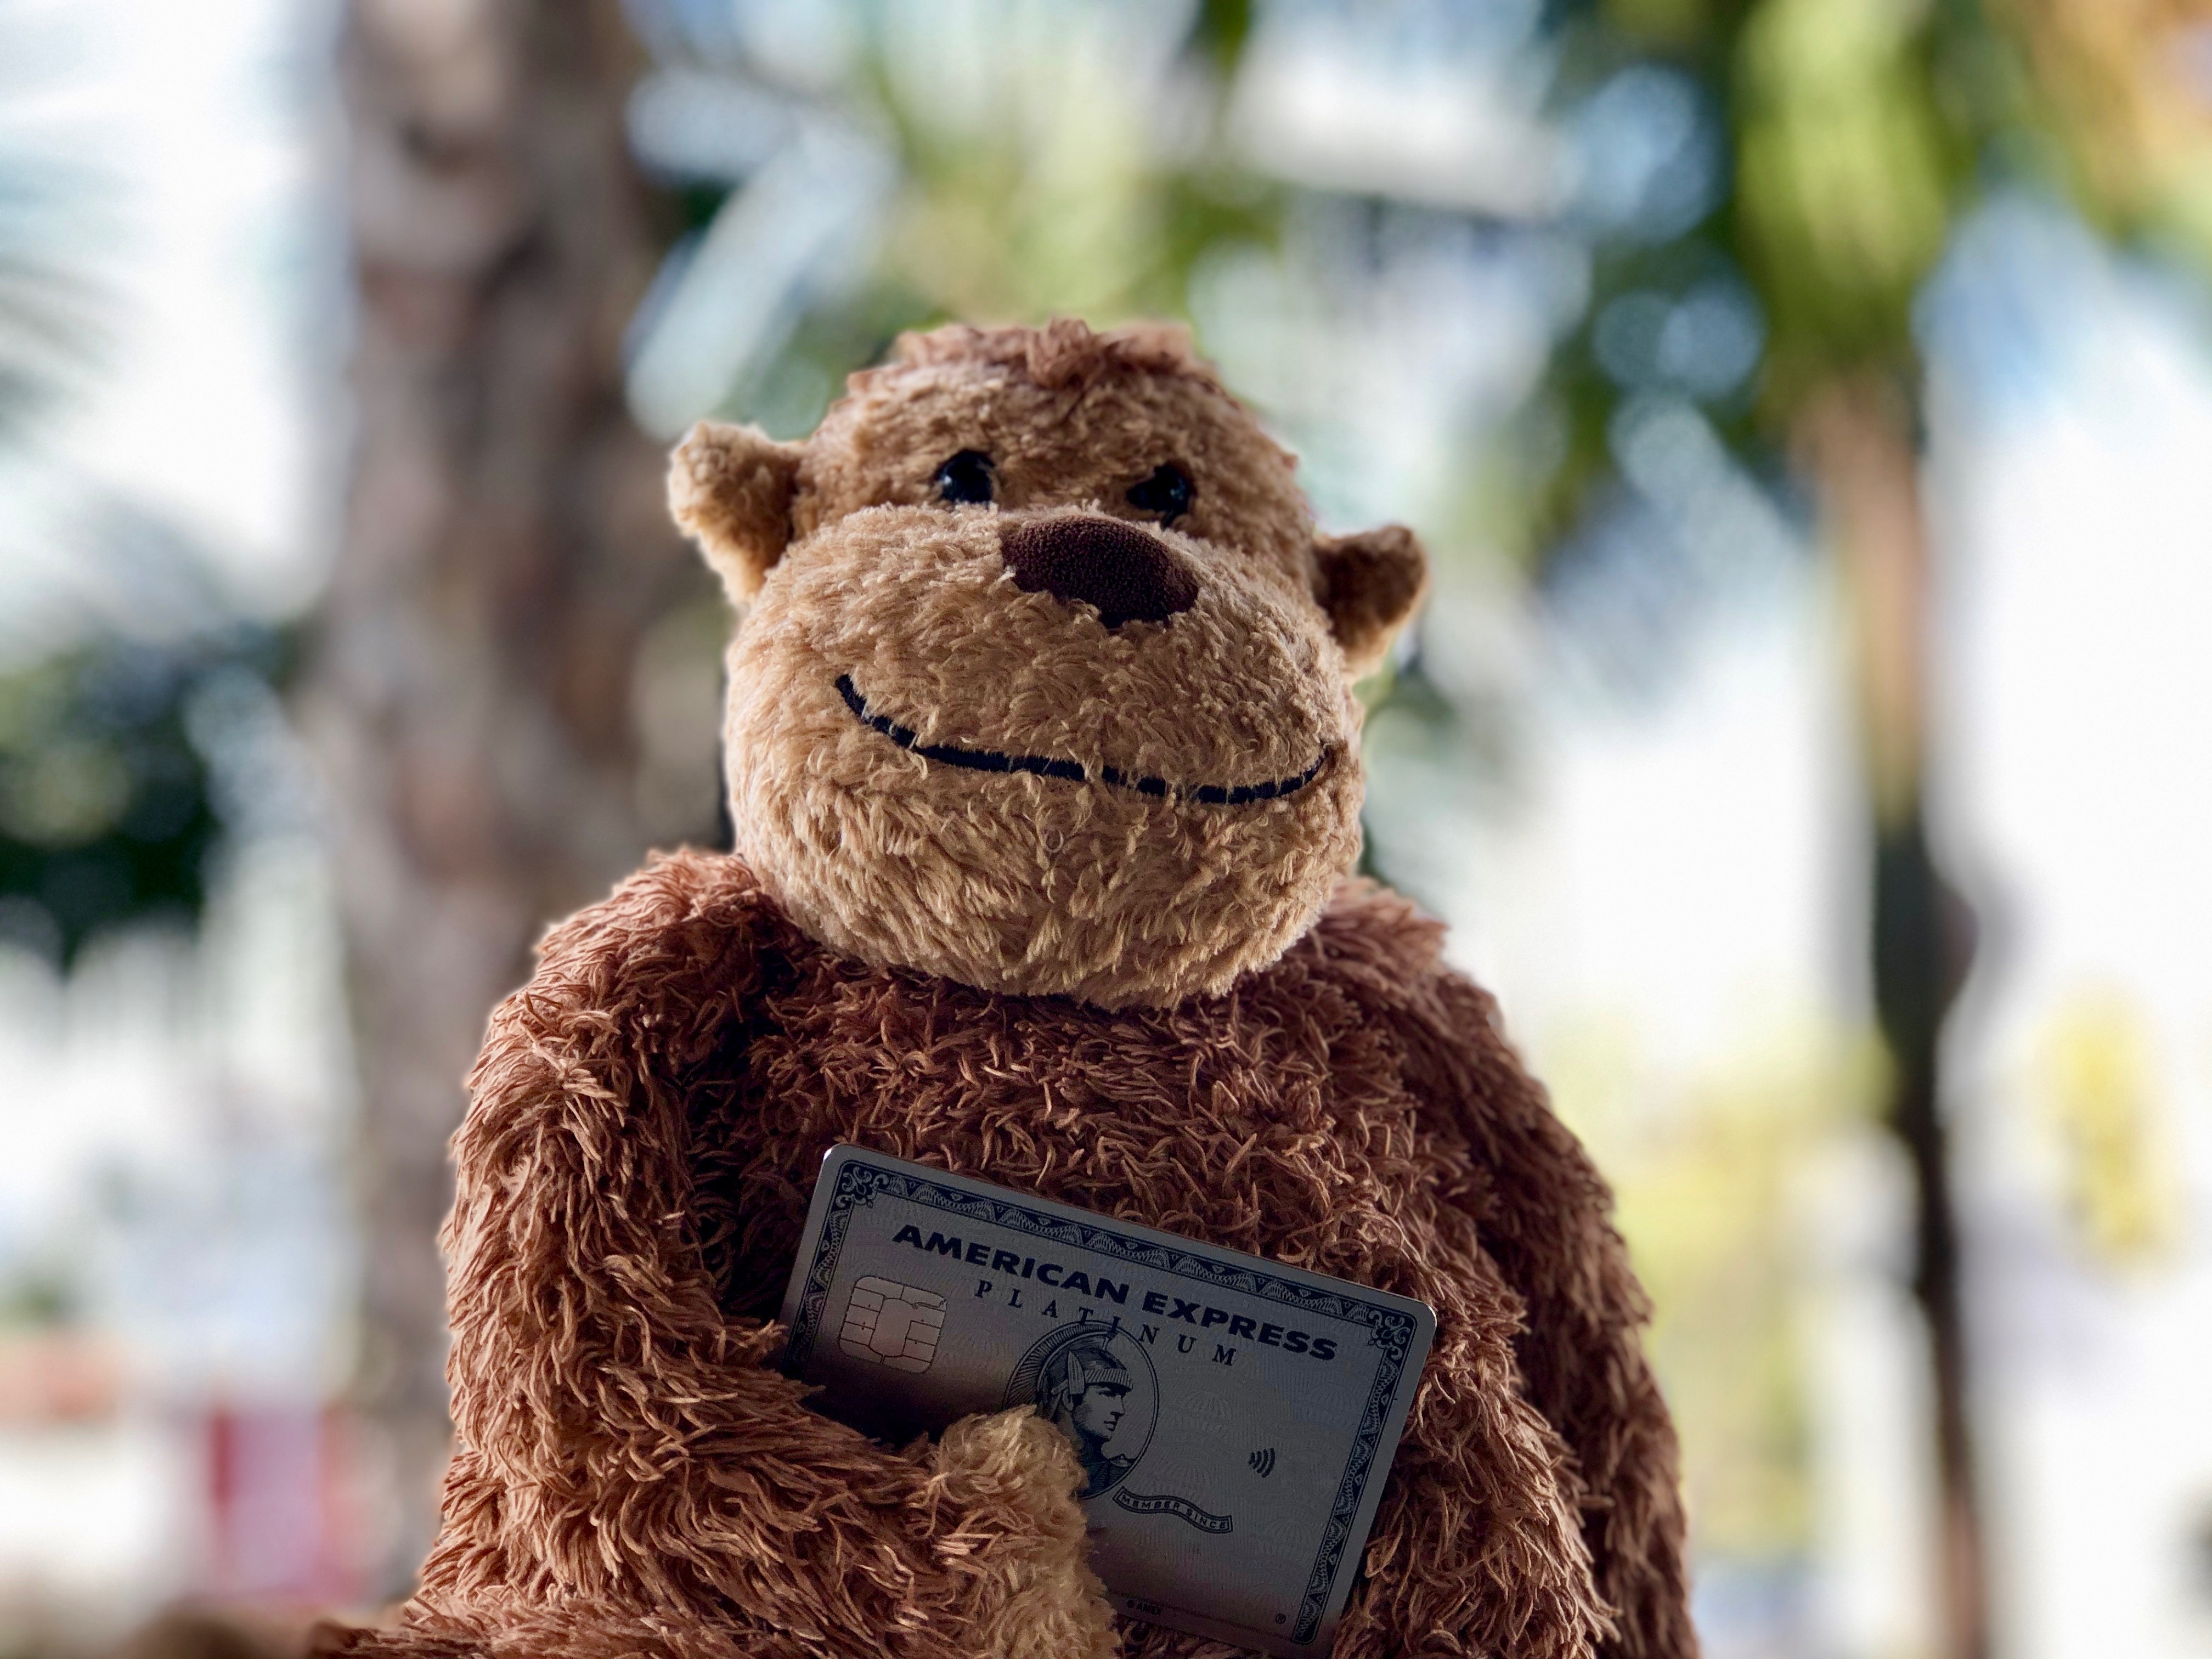 a stuffed animal holding a card